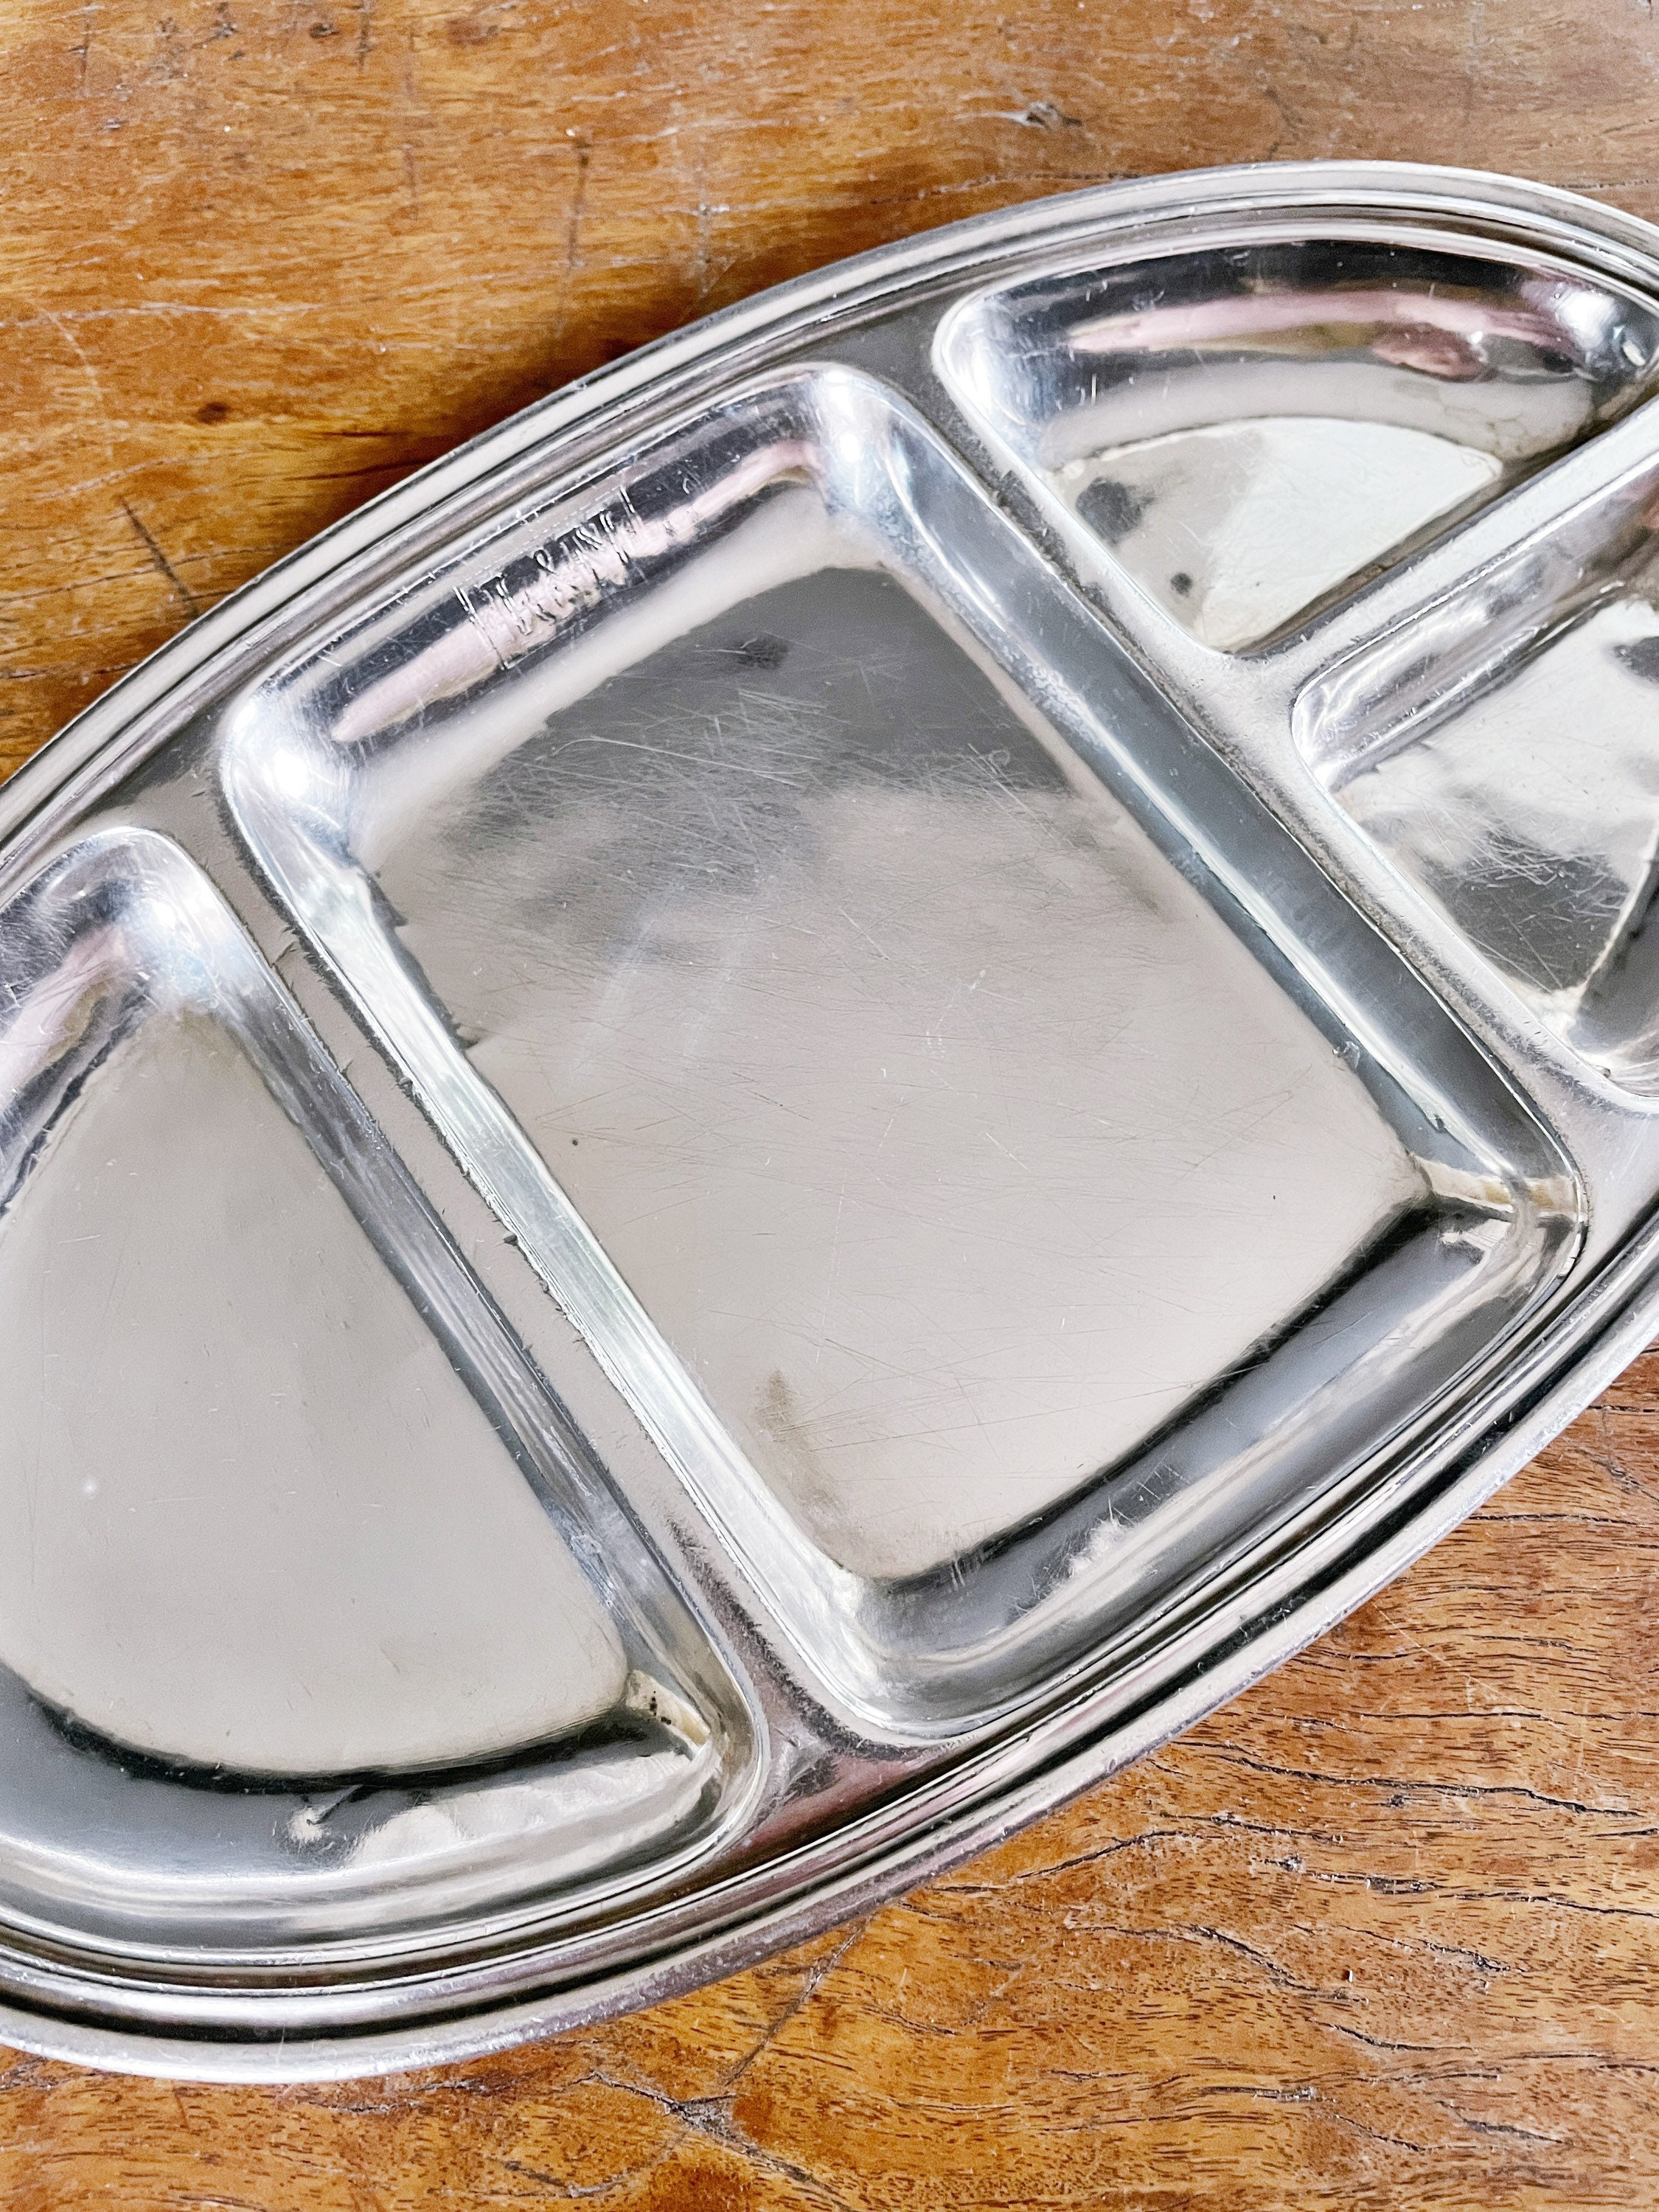 Metalix Tin Standard Baking Tray 37cm - Silver